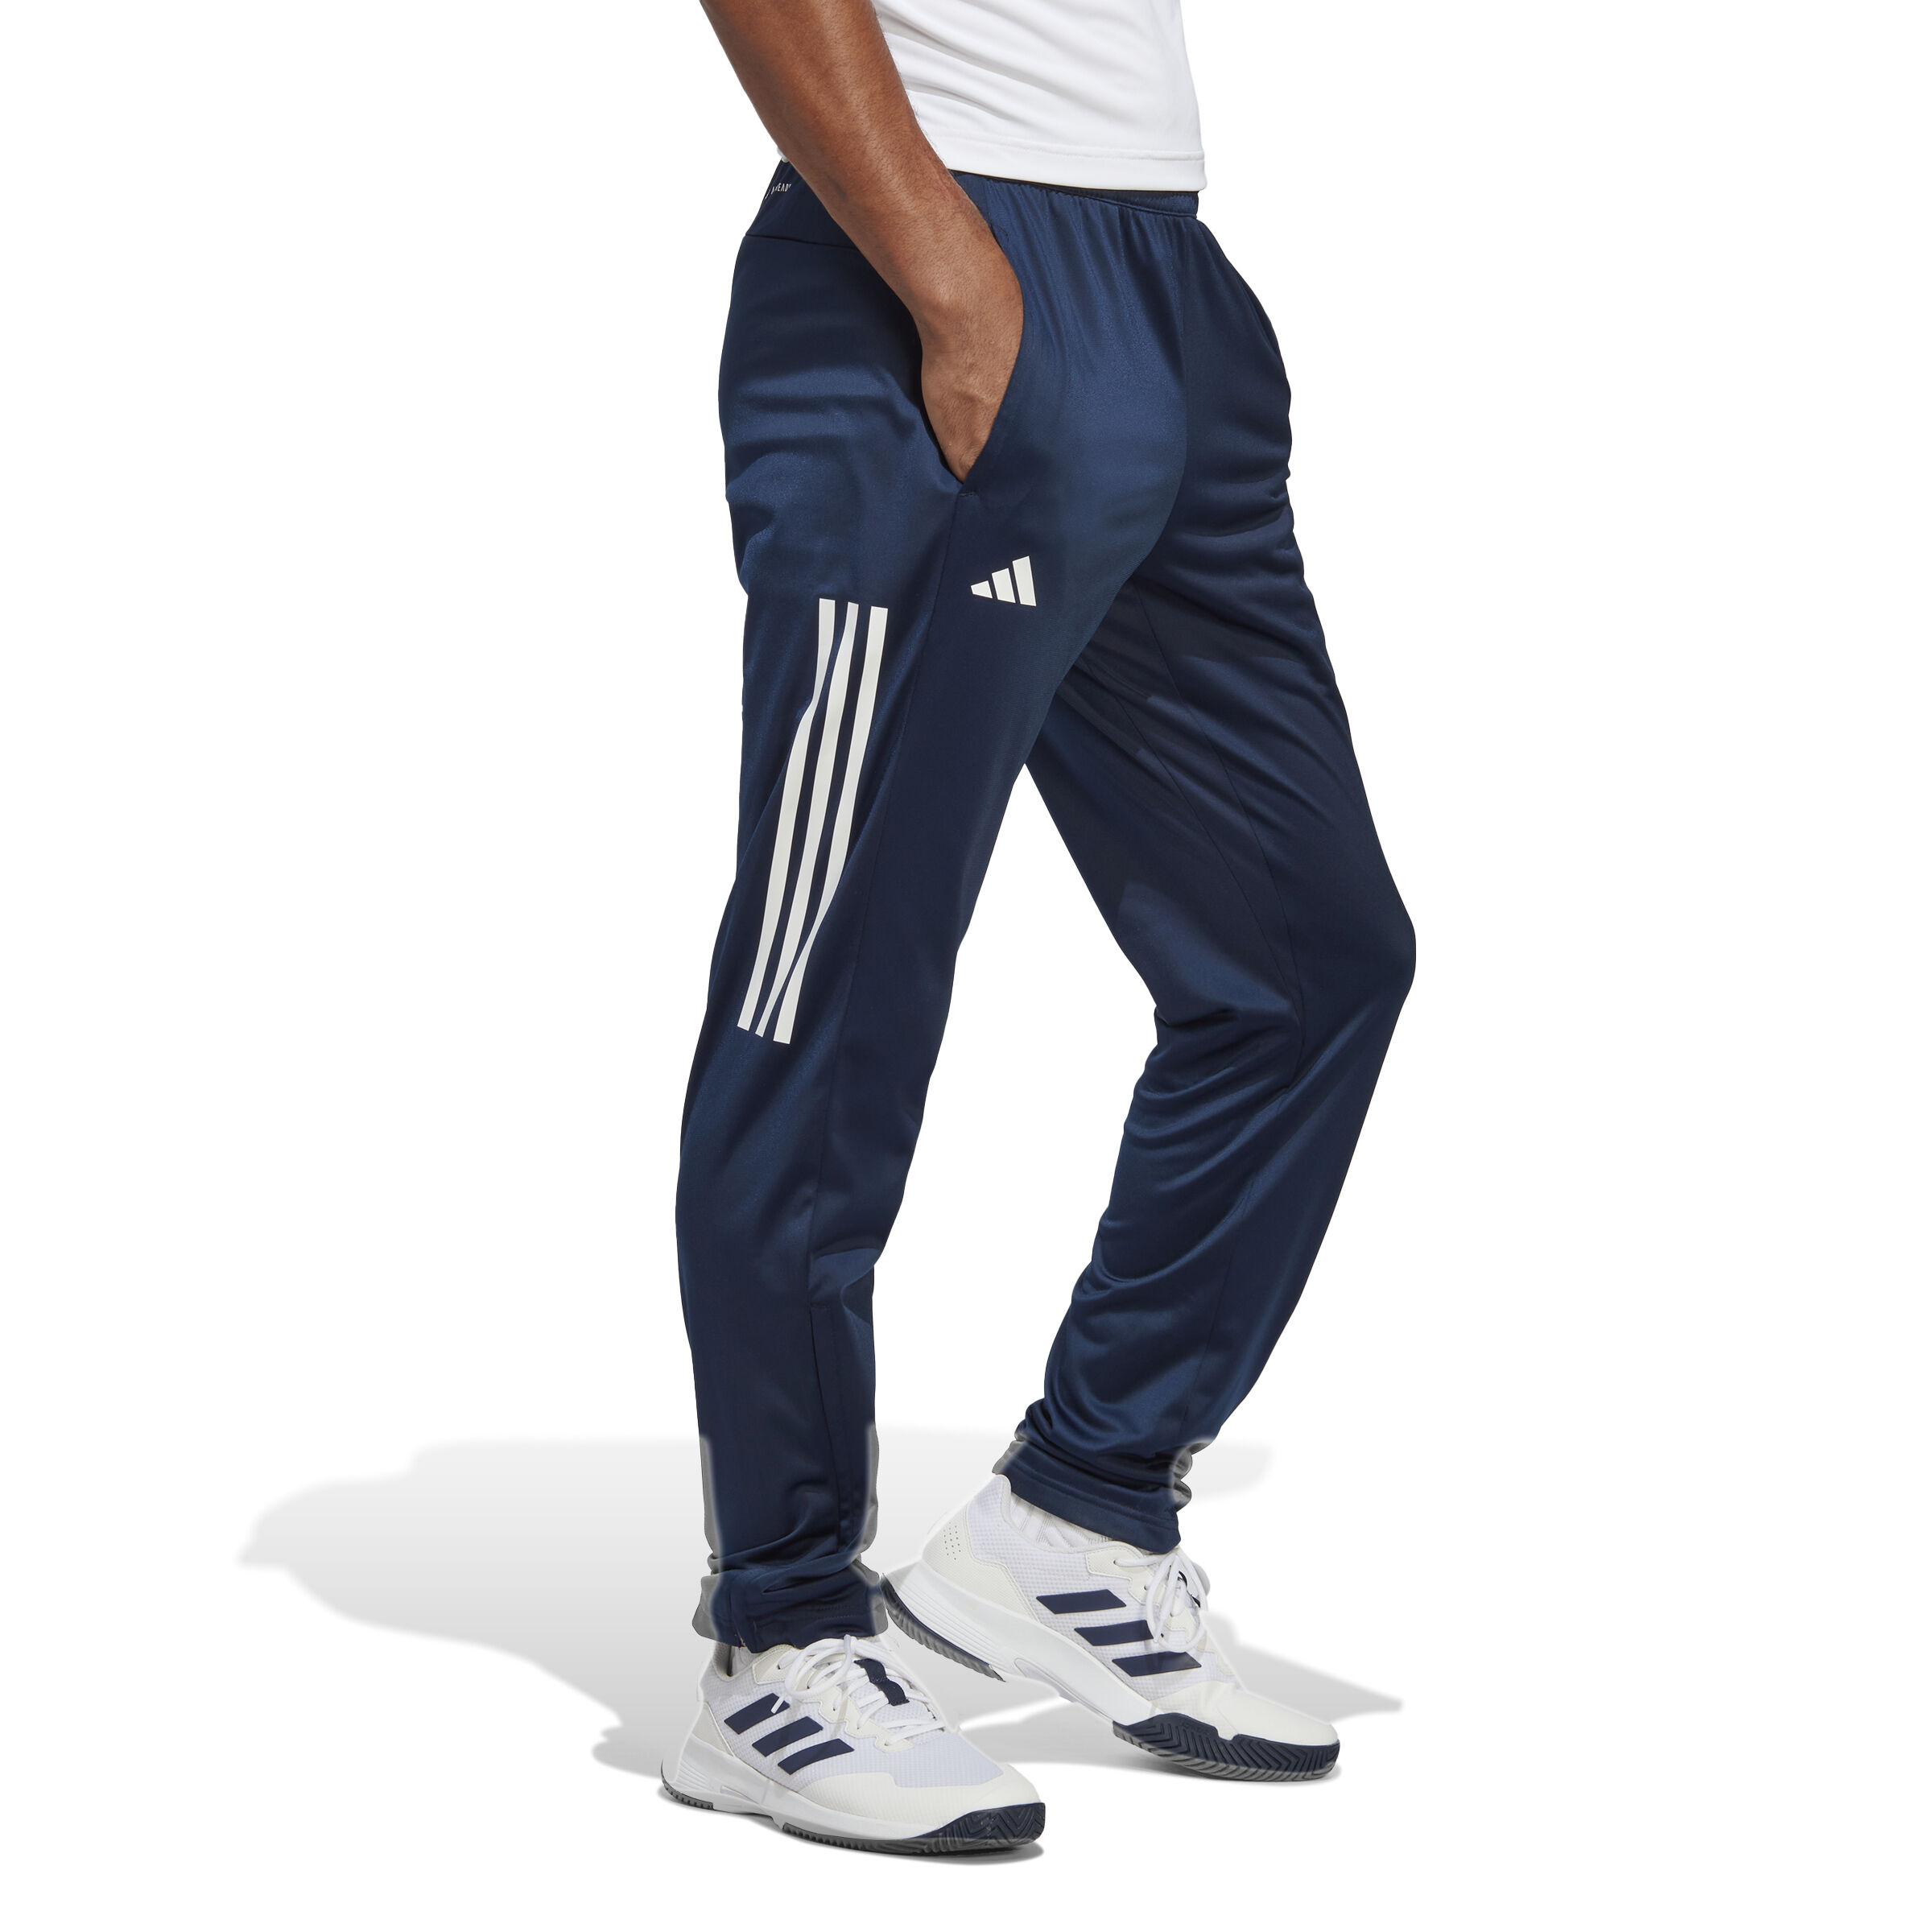 Adidas Women 3 Stripes Yoga Pant at Rs 1499.00 | Adidas Track Pants | ID:  2850547787848